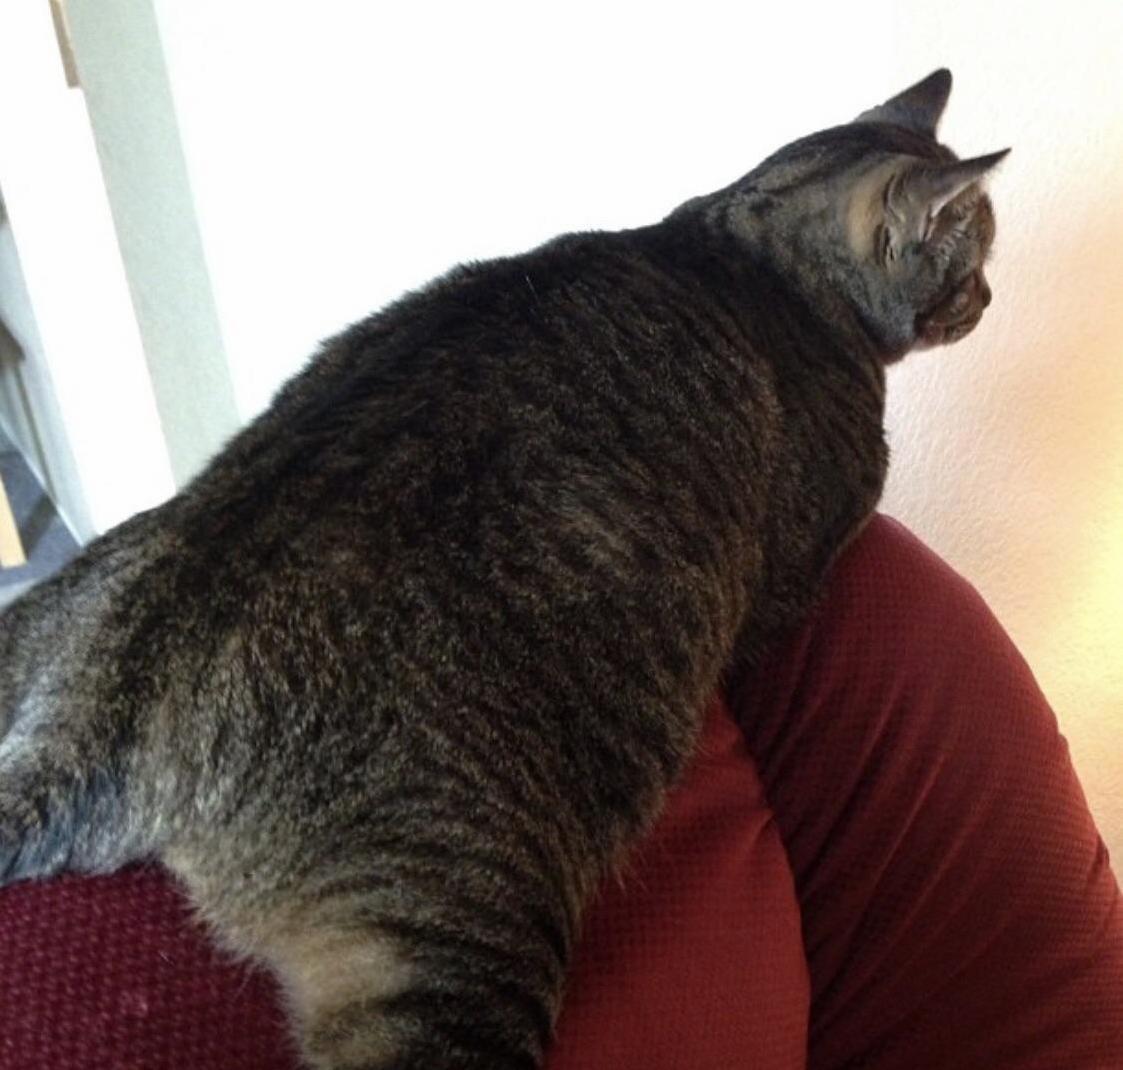 Reddit meet my fat cat charlie.